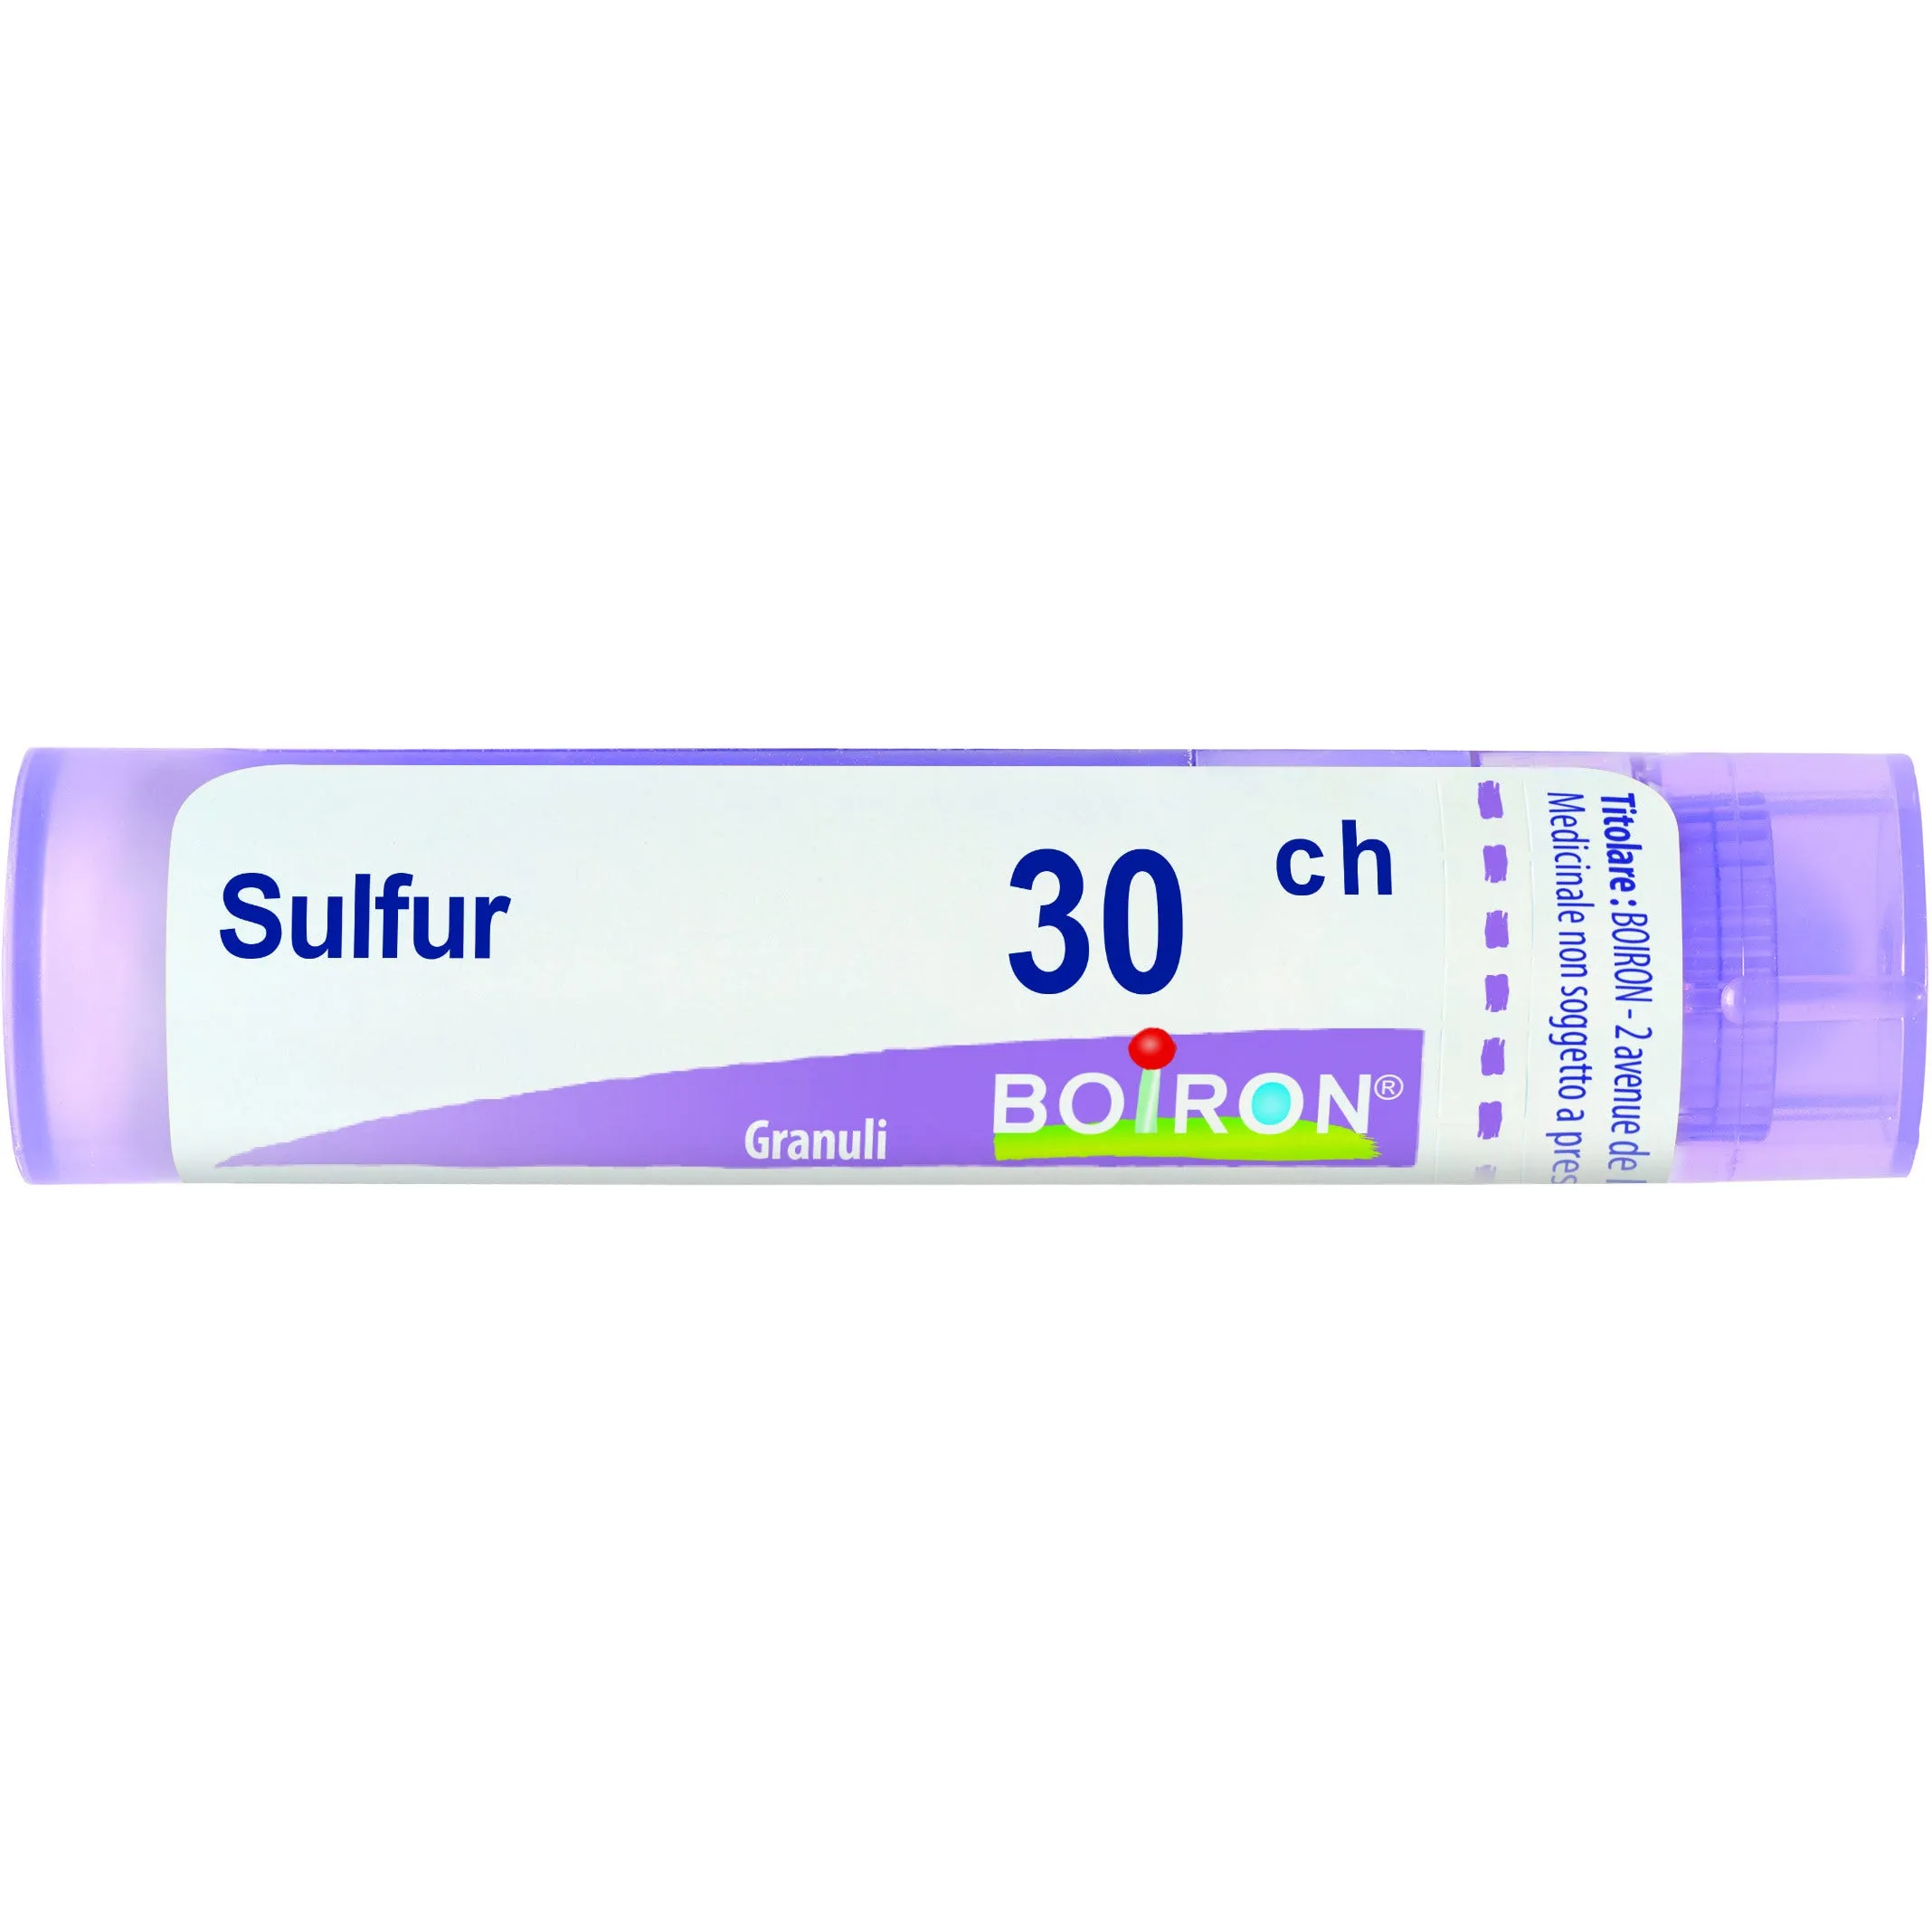 Boiron Sulfur 80 Granuli 30 CH 